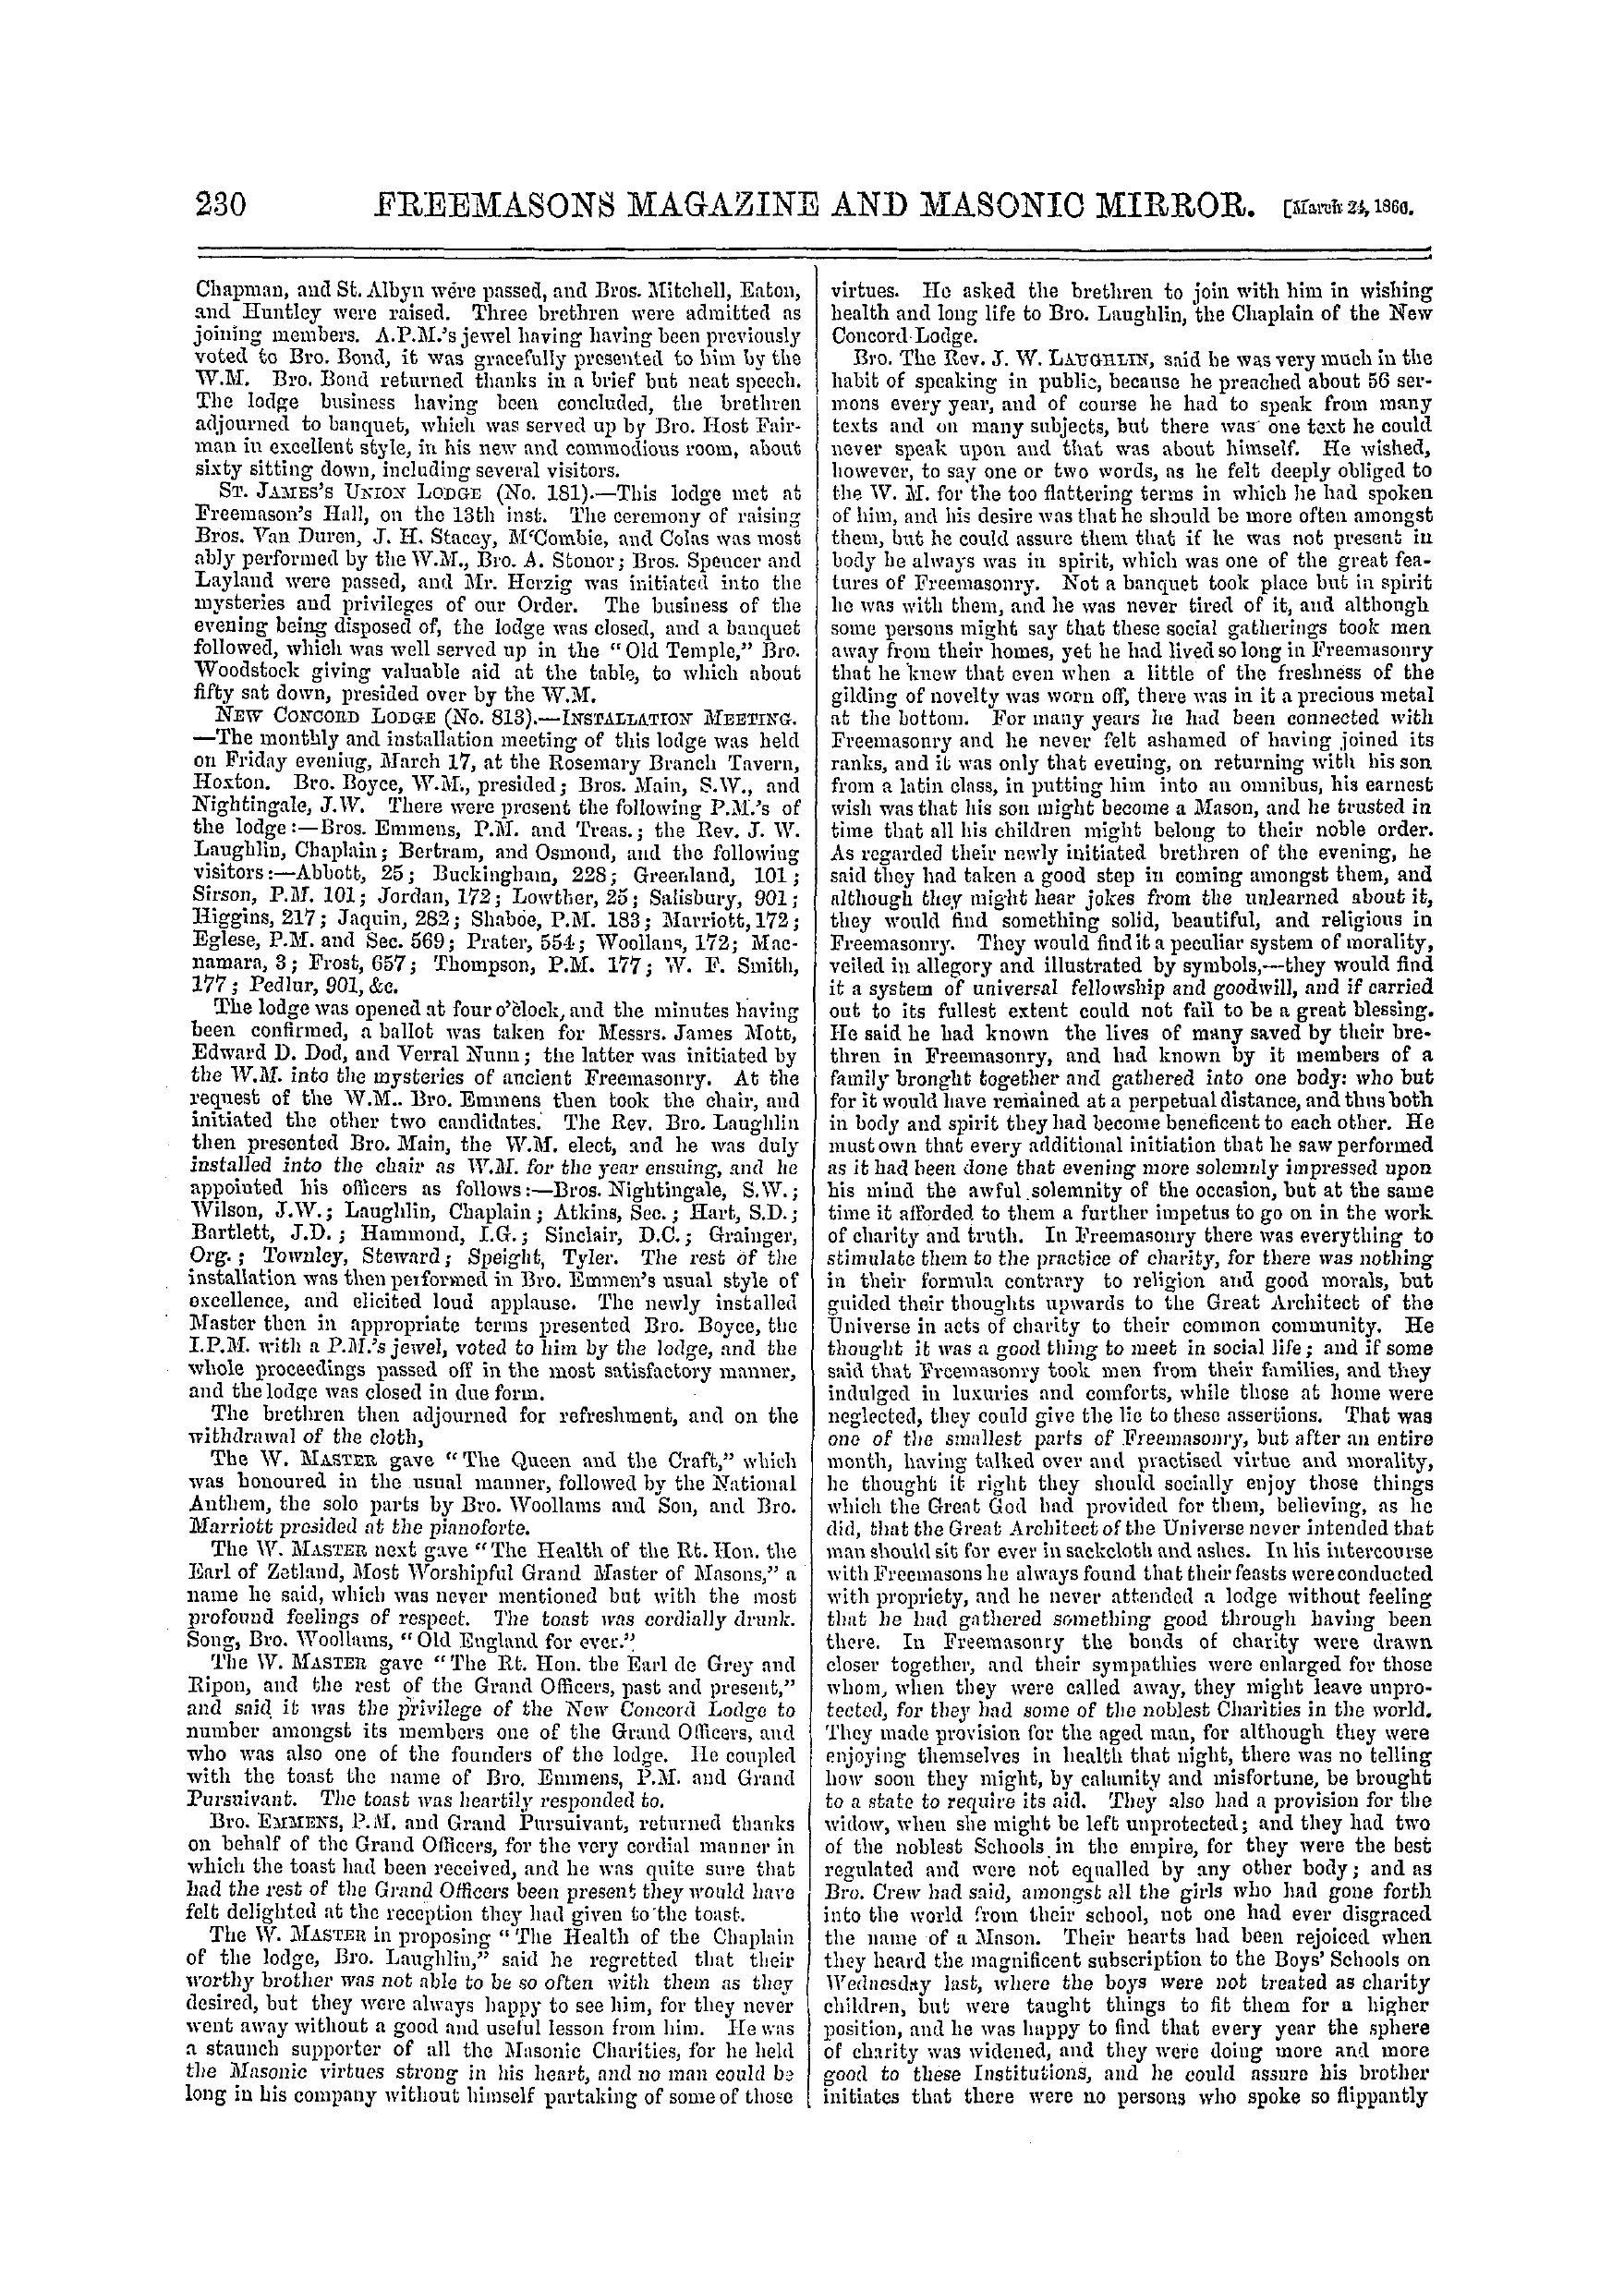 The Freemasons' Monthly Magazine: 1866-03-24 - Metropolitan.